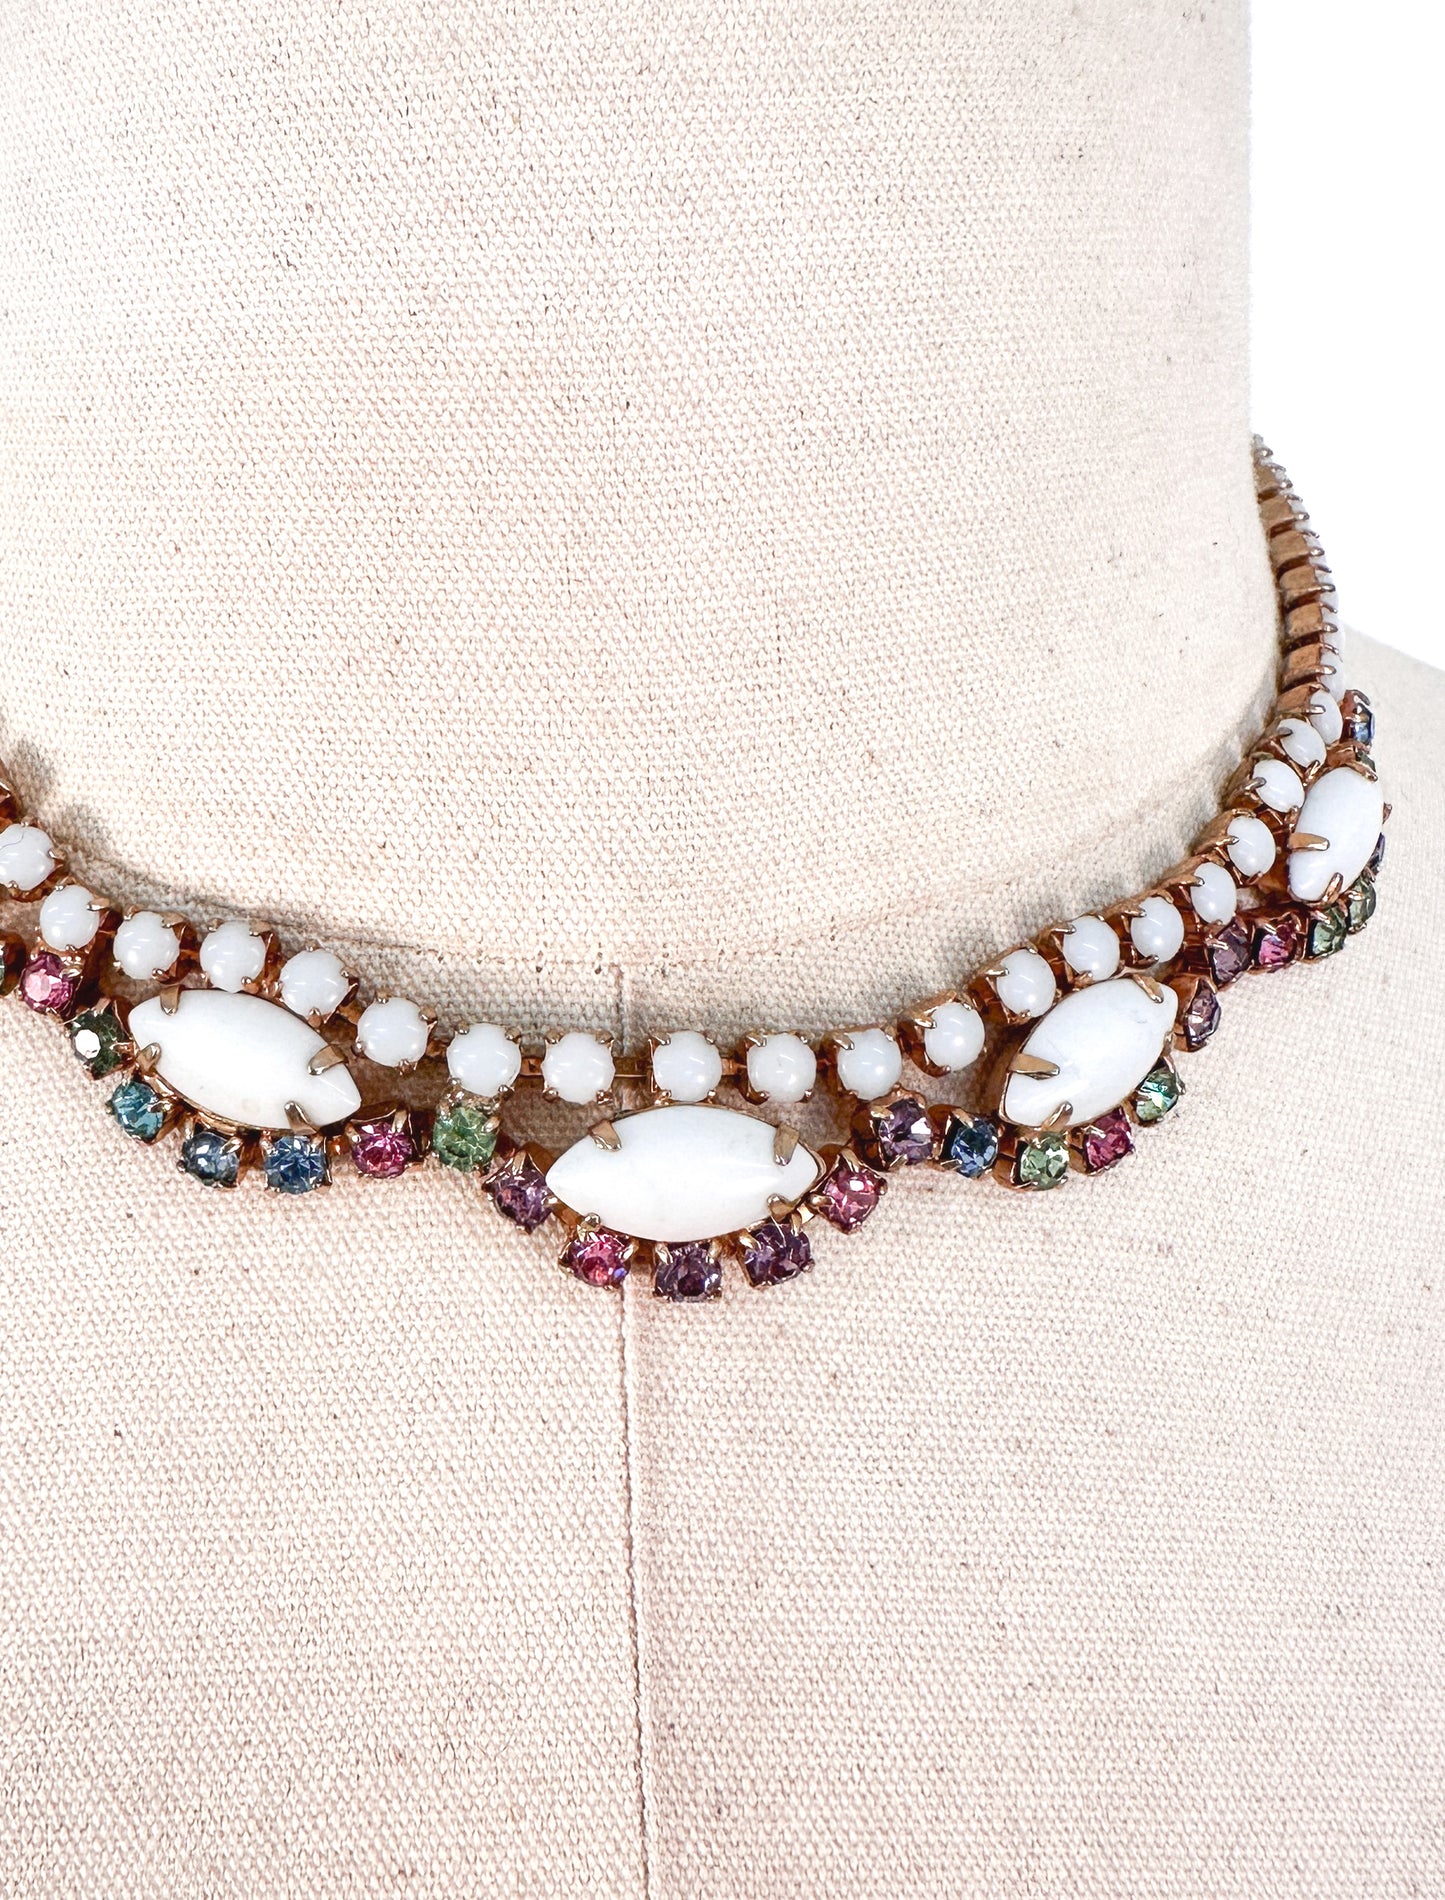 1950s White Enamel Multi-Colored Rhinestone Necklace